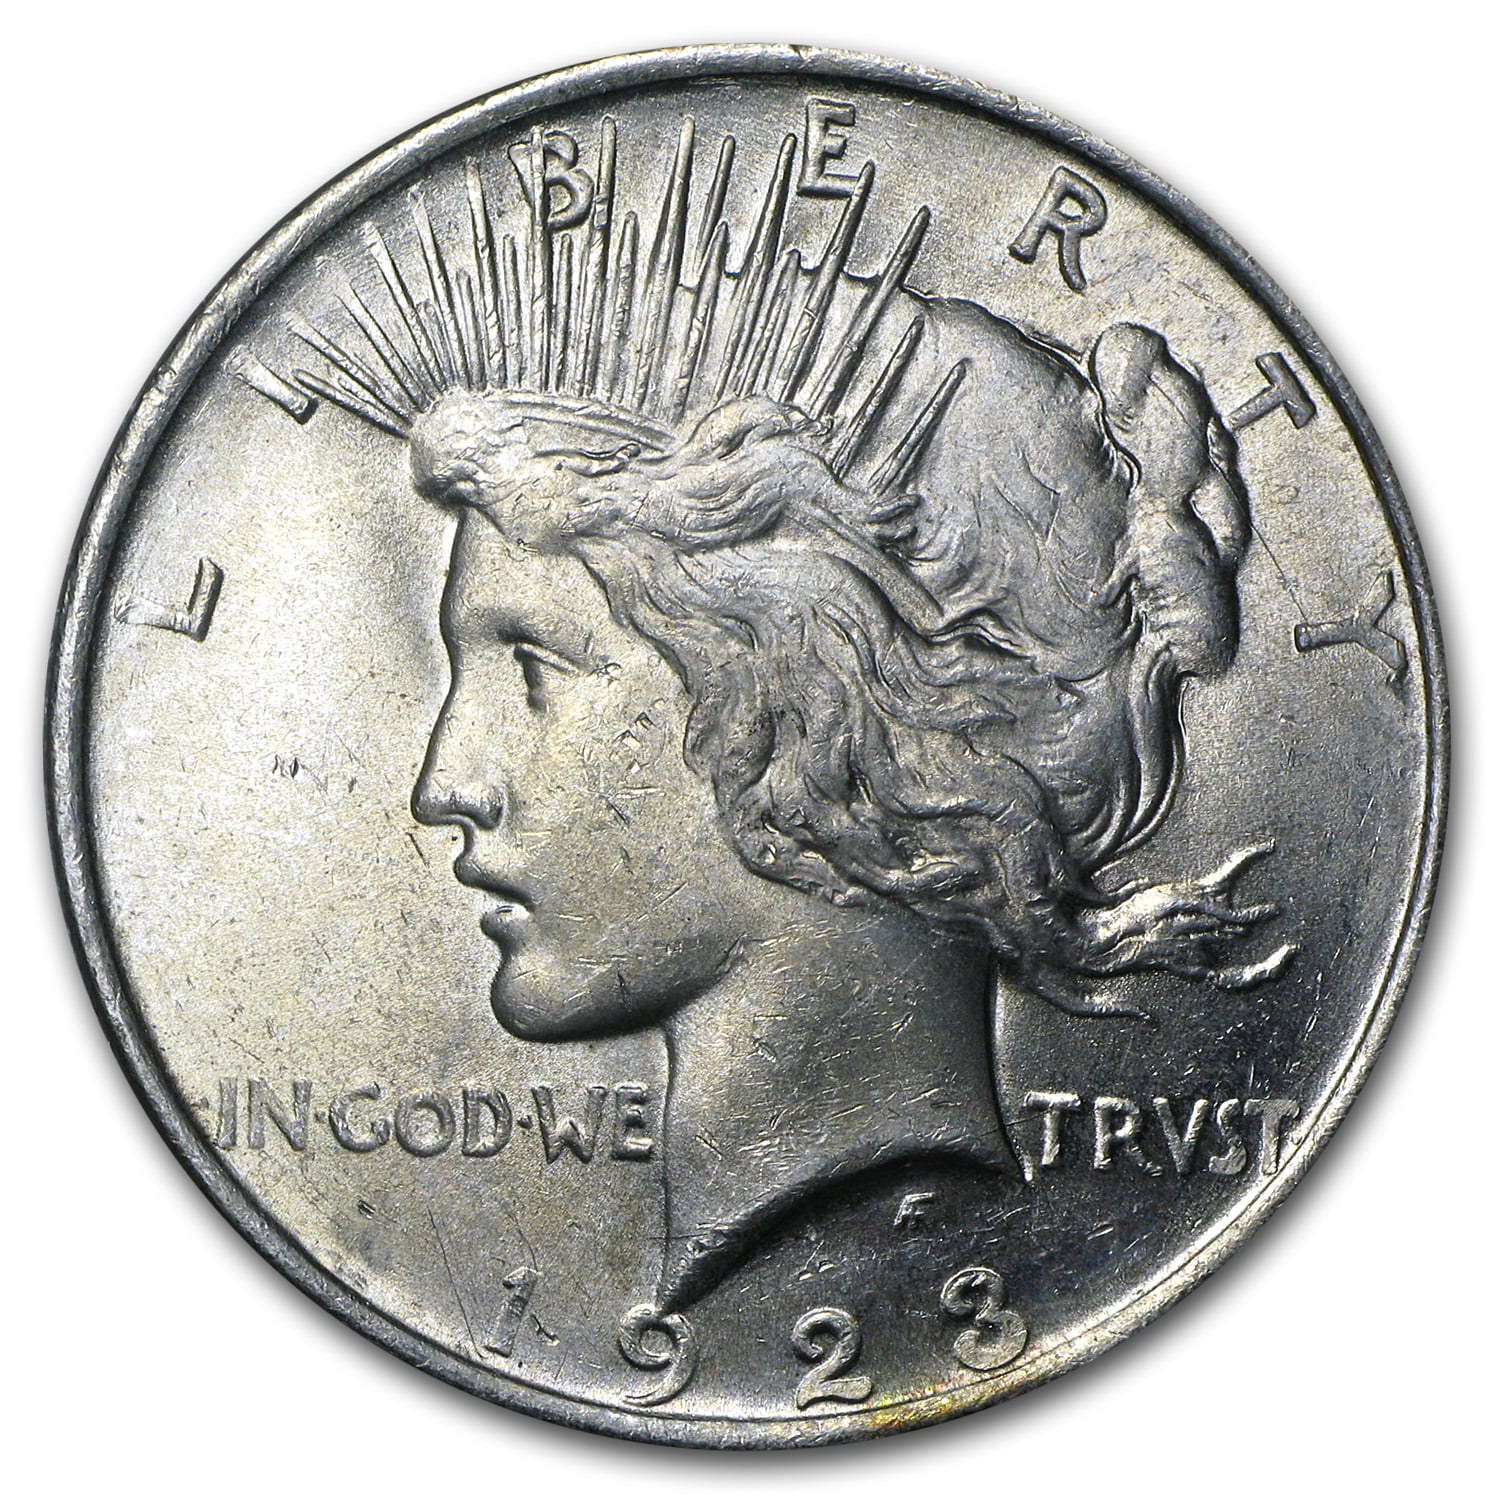 Beautiful 1923 Peace Silver Dollar Coin Free Shipping!!!!!